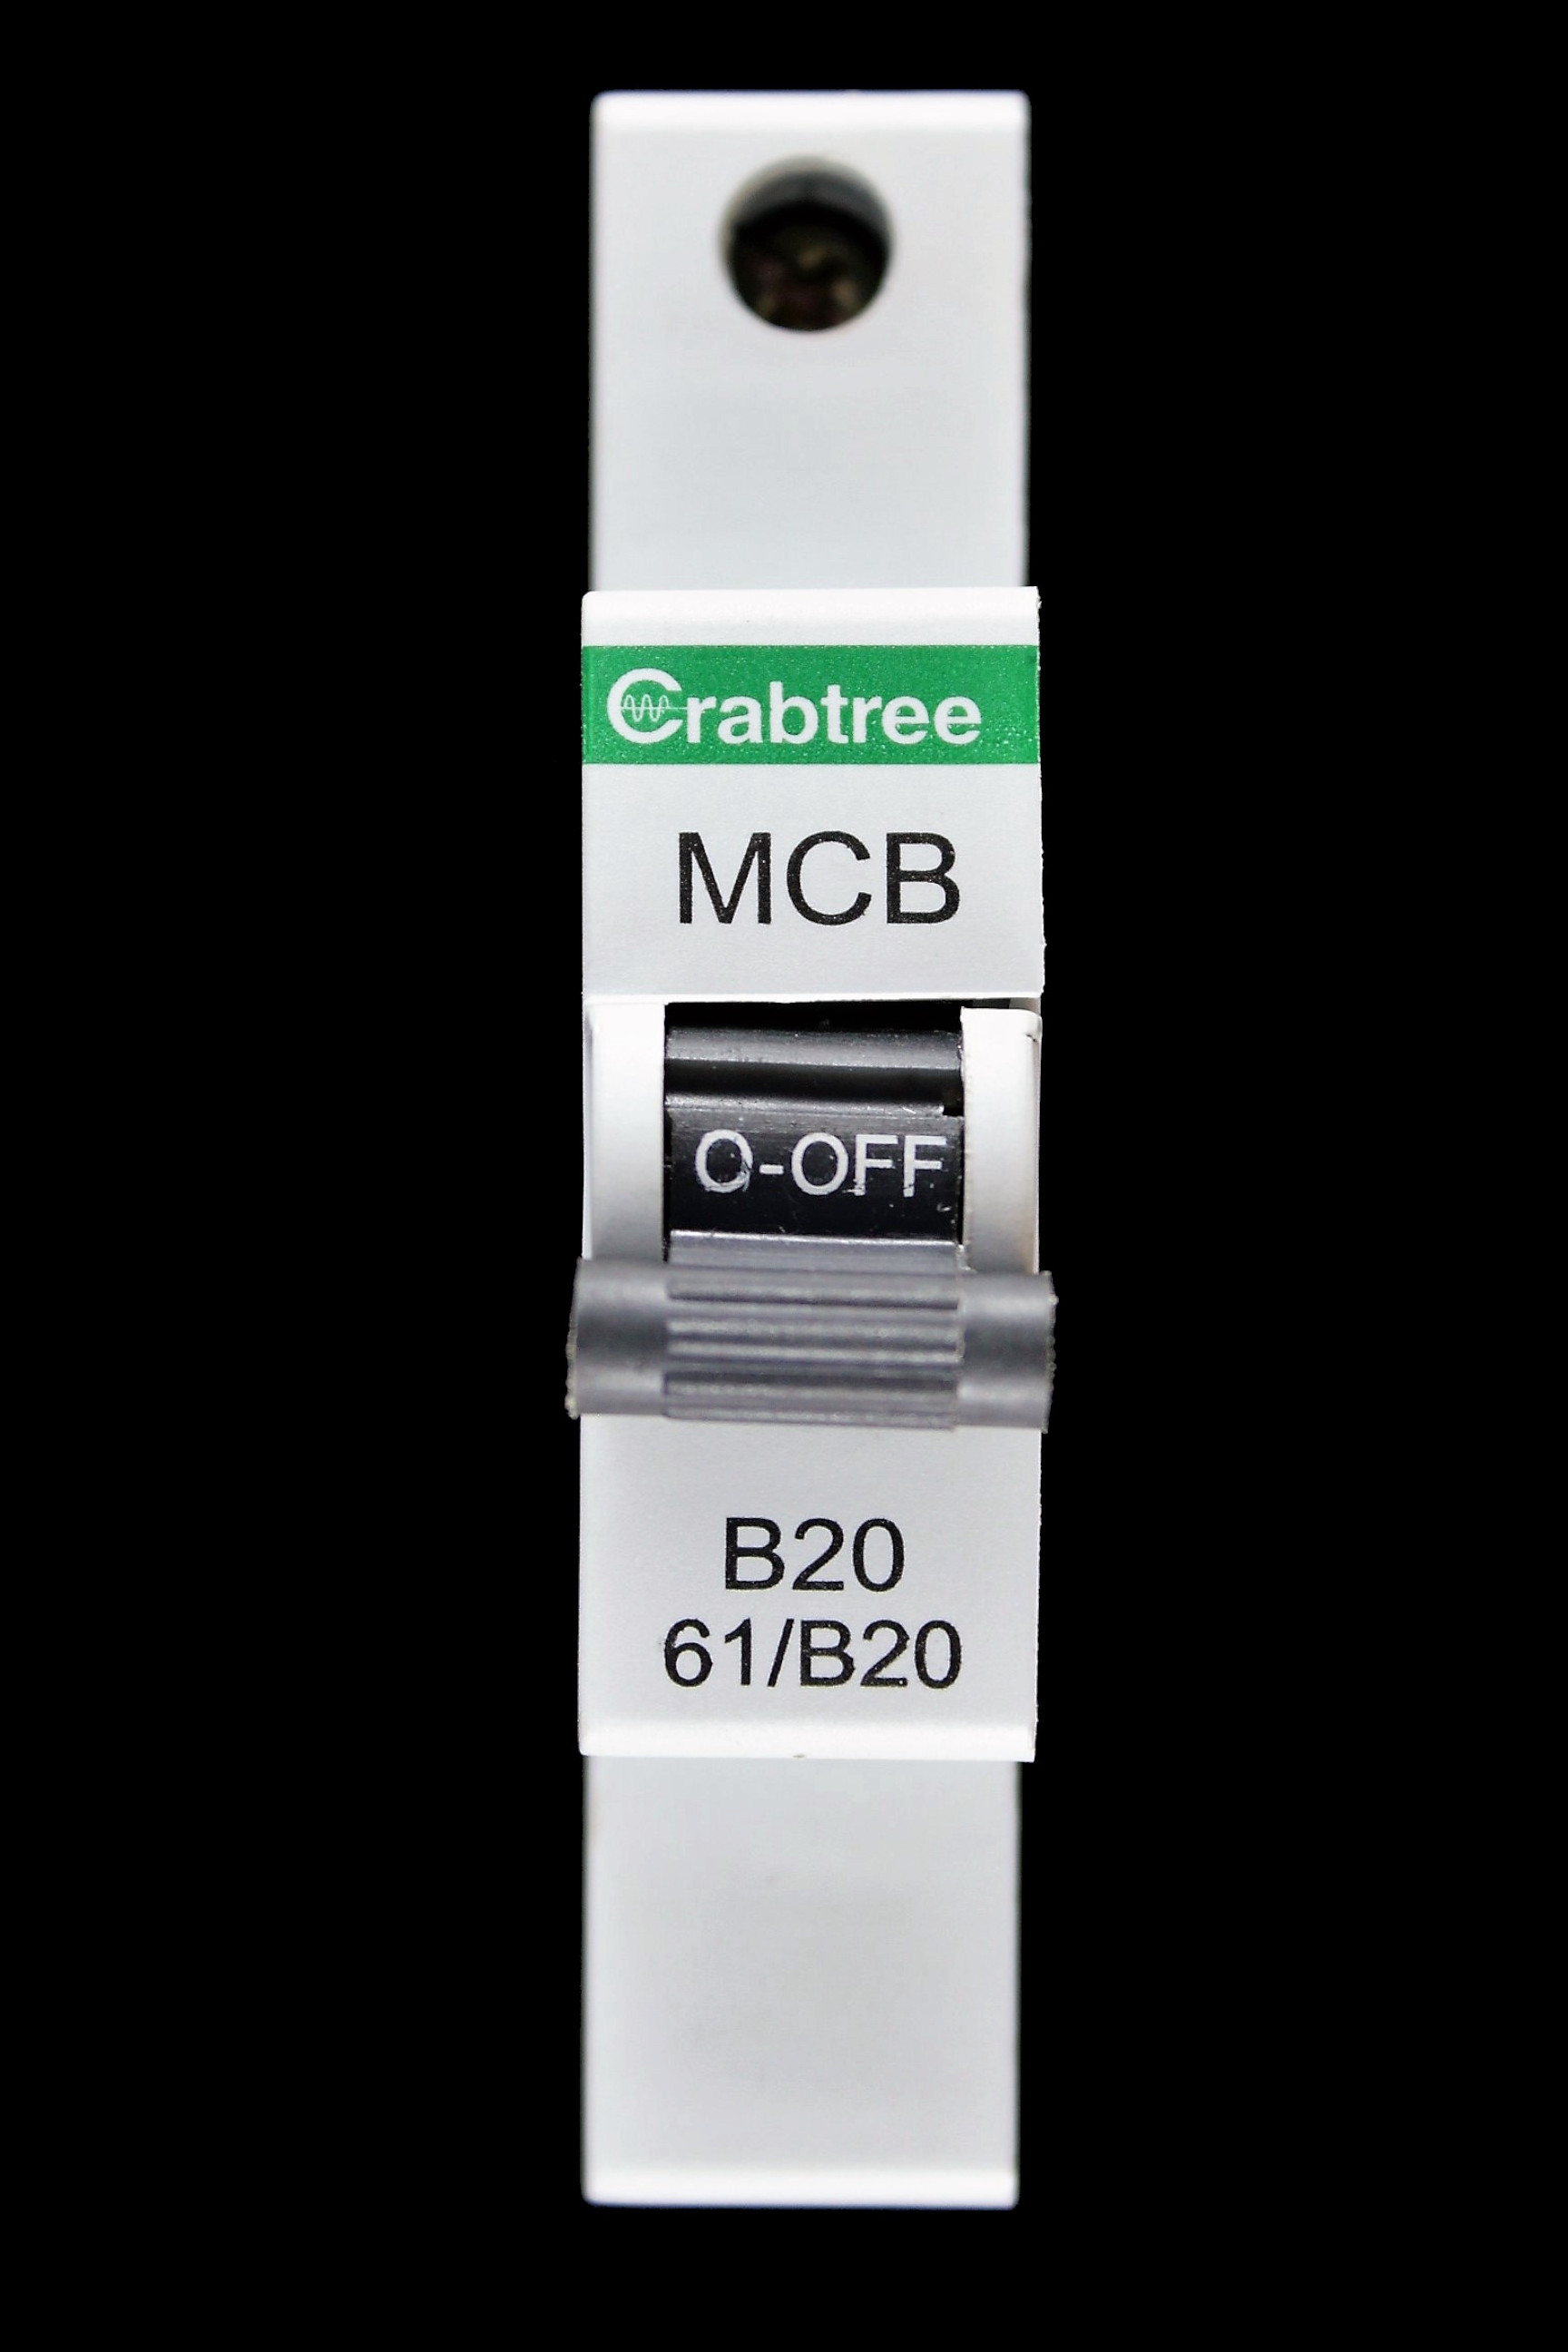 CRABTREE 20 AMP CURVE B 6kA MCB CIRCUIT BREAKER 61/B20 STARBREAKER